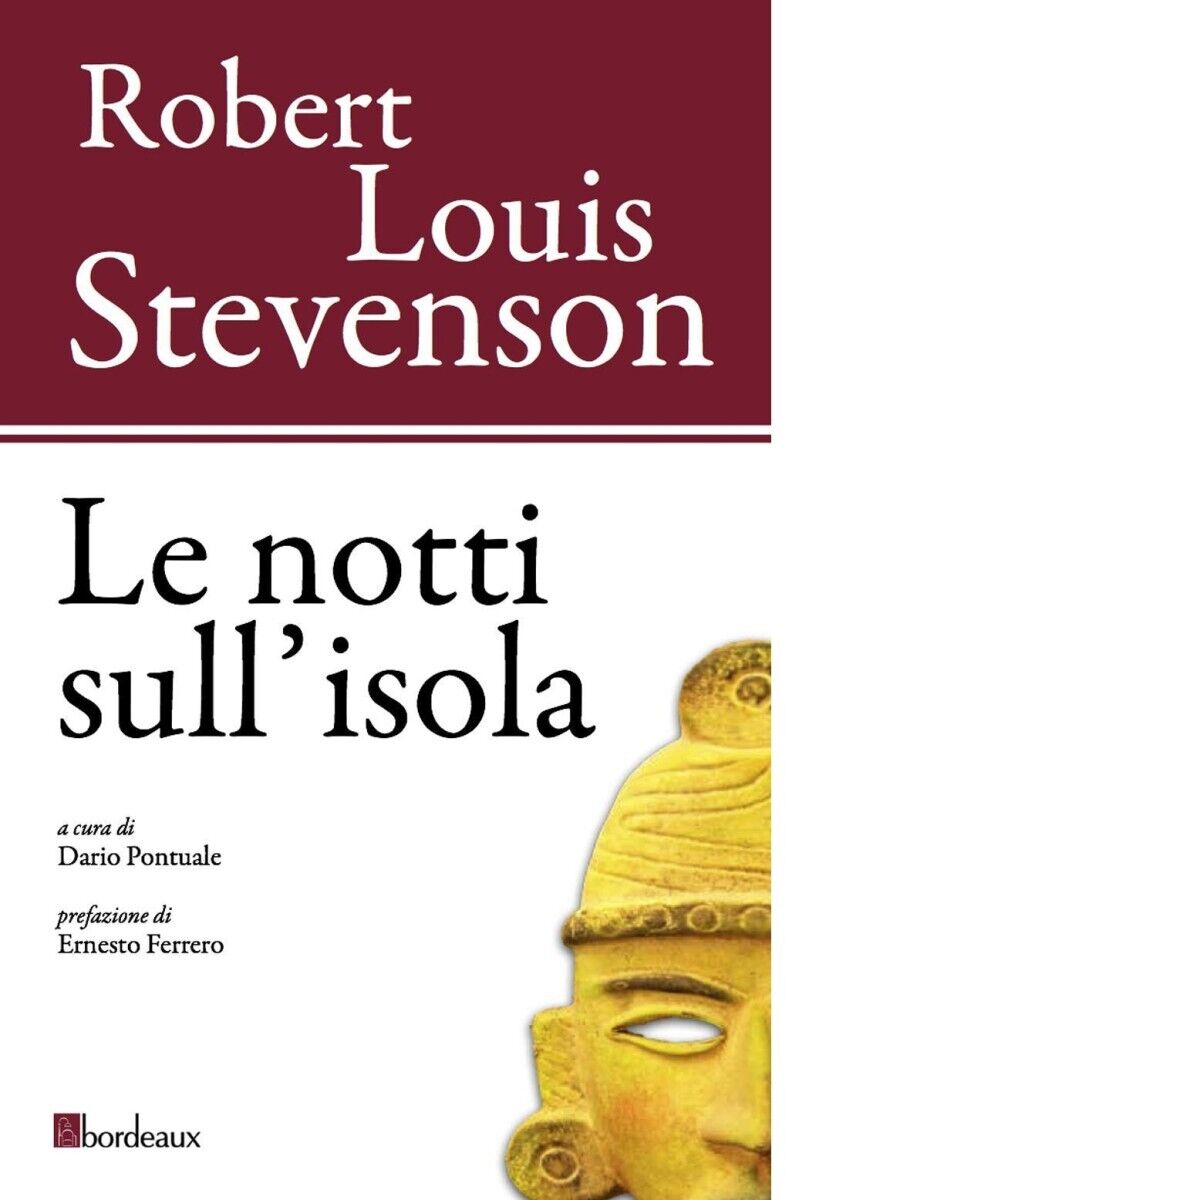  Le notti sulL'isola di Robert L. Stevenson, 2016, Bordeaux